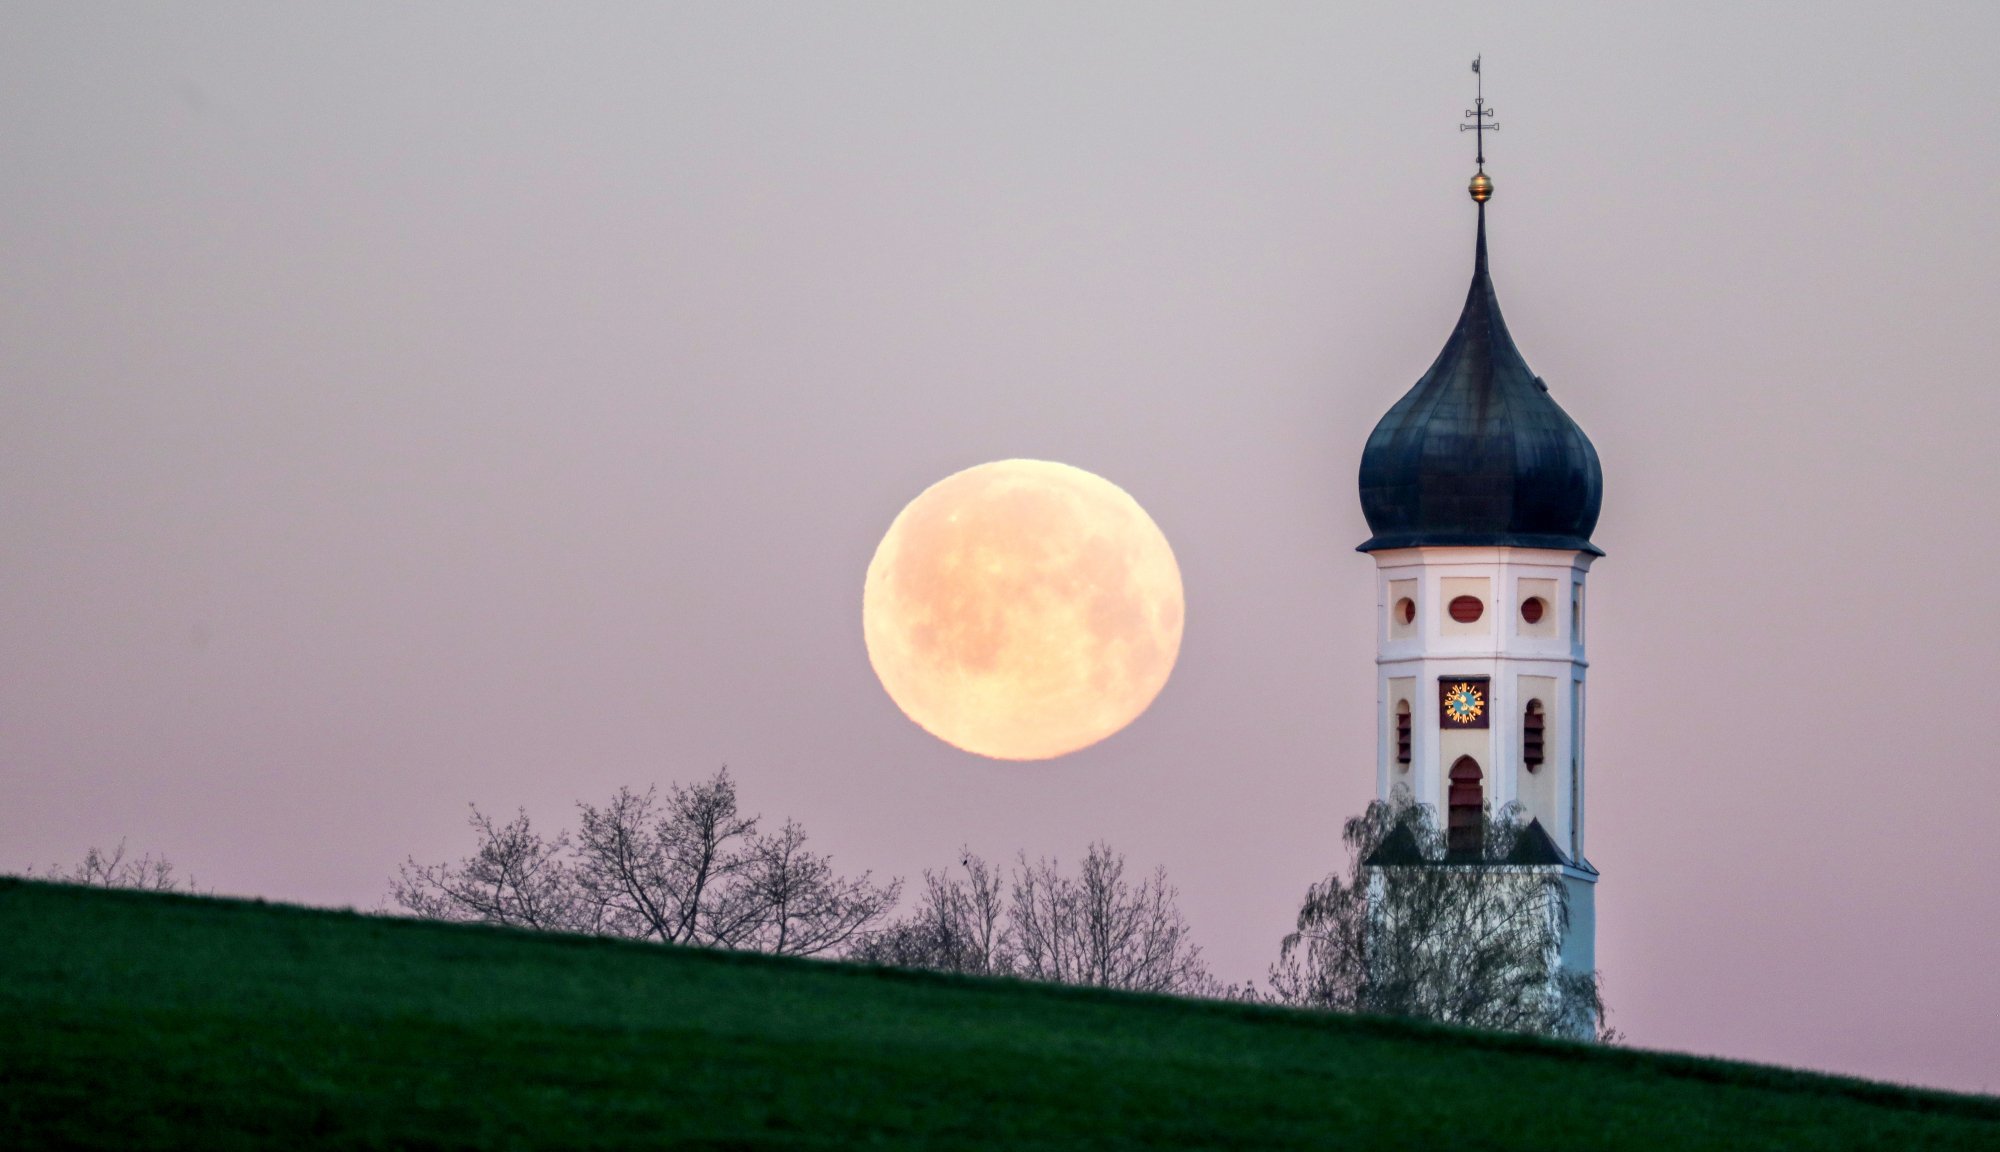 The full moon beside a Church spire.